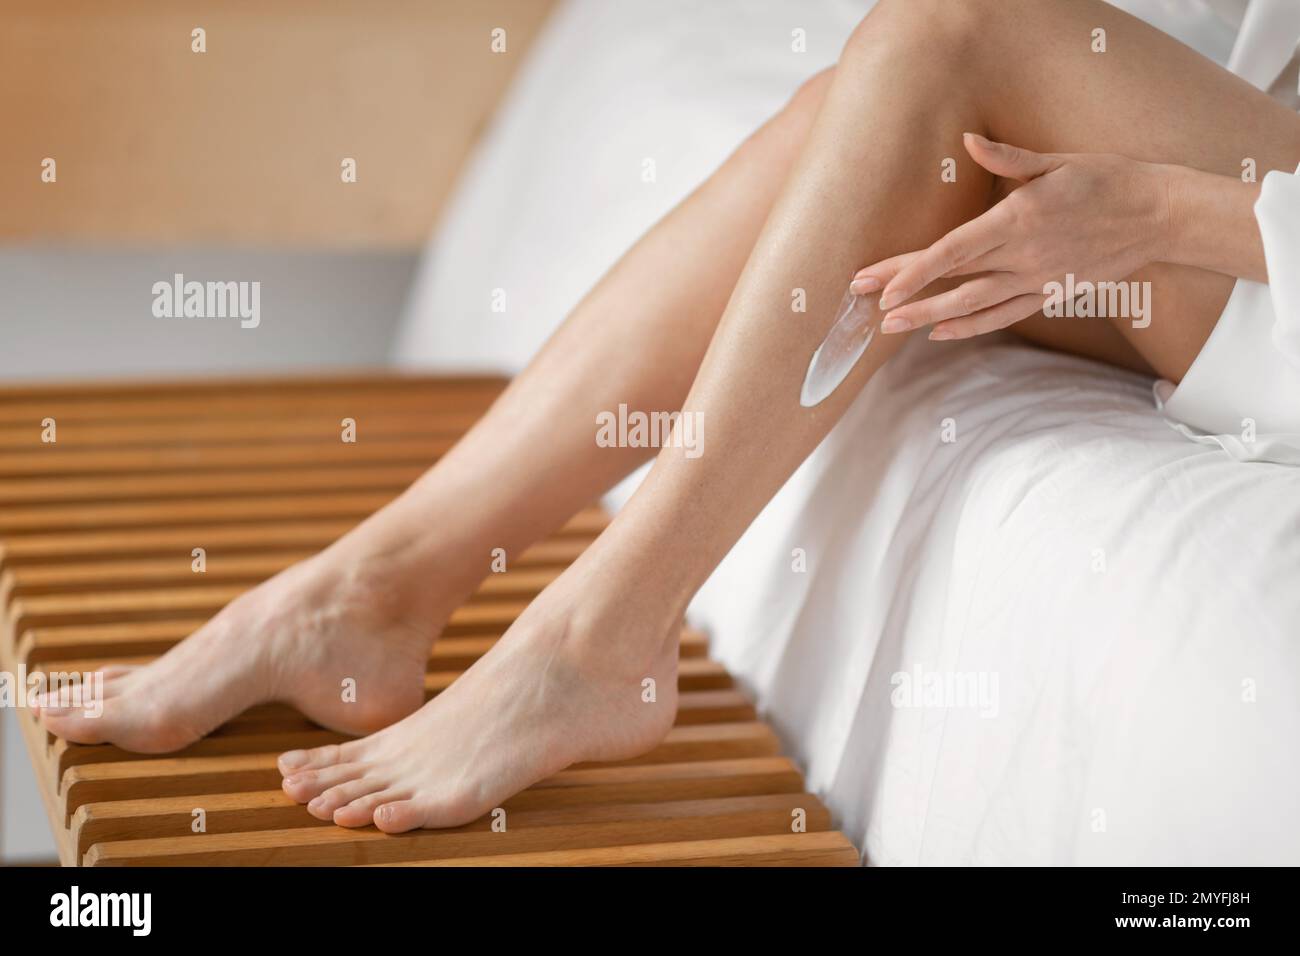 Millennial european woman applies cream on her legs, enjoys daily procedures in bedroom interior alone Stock Photo